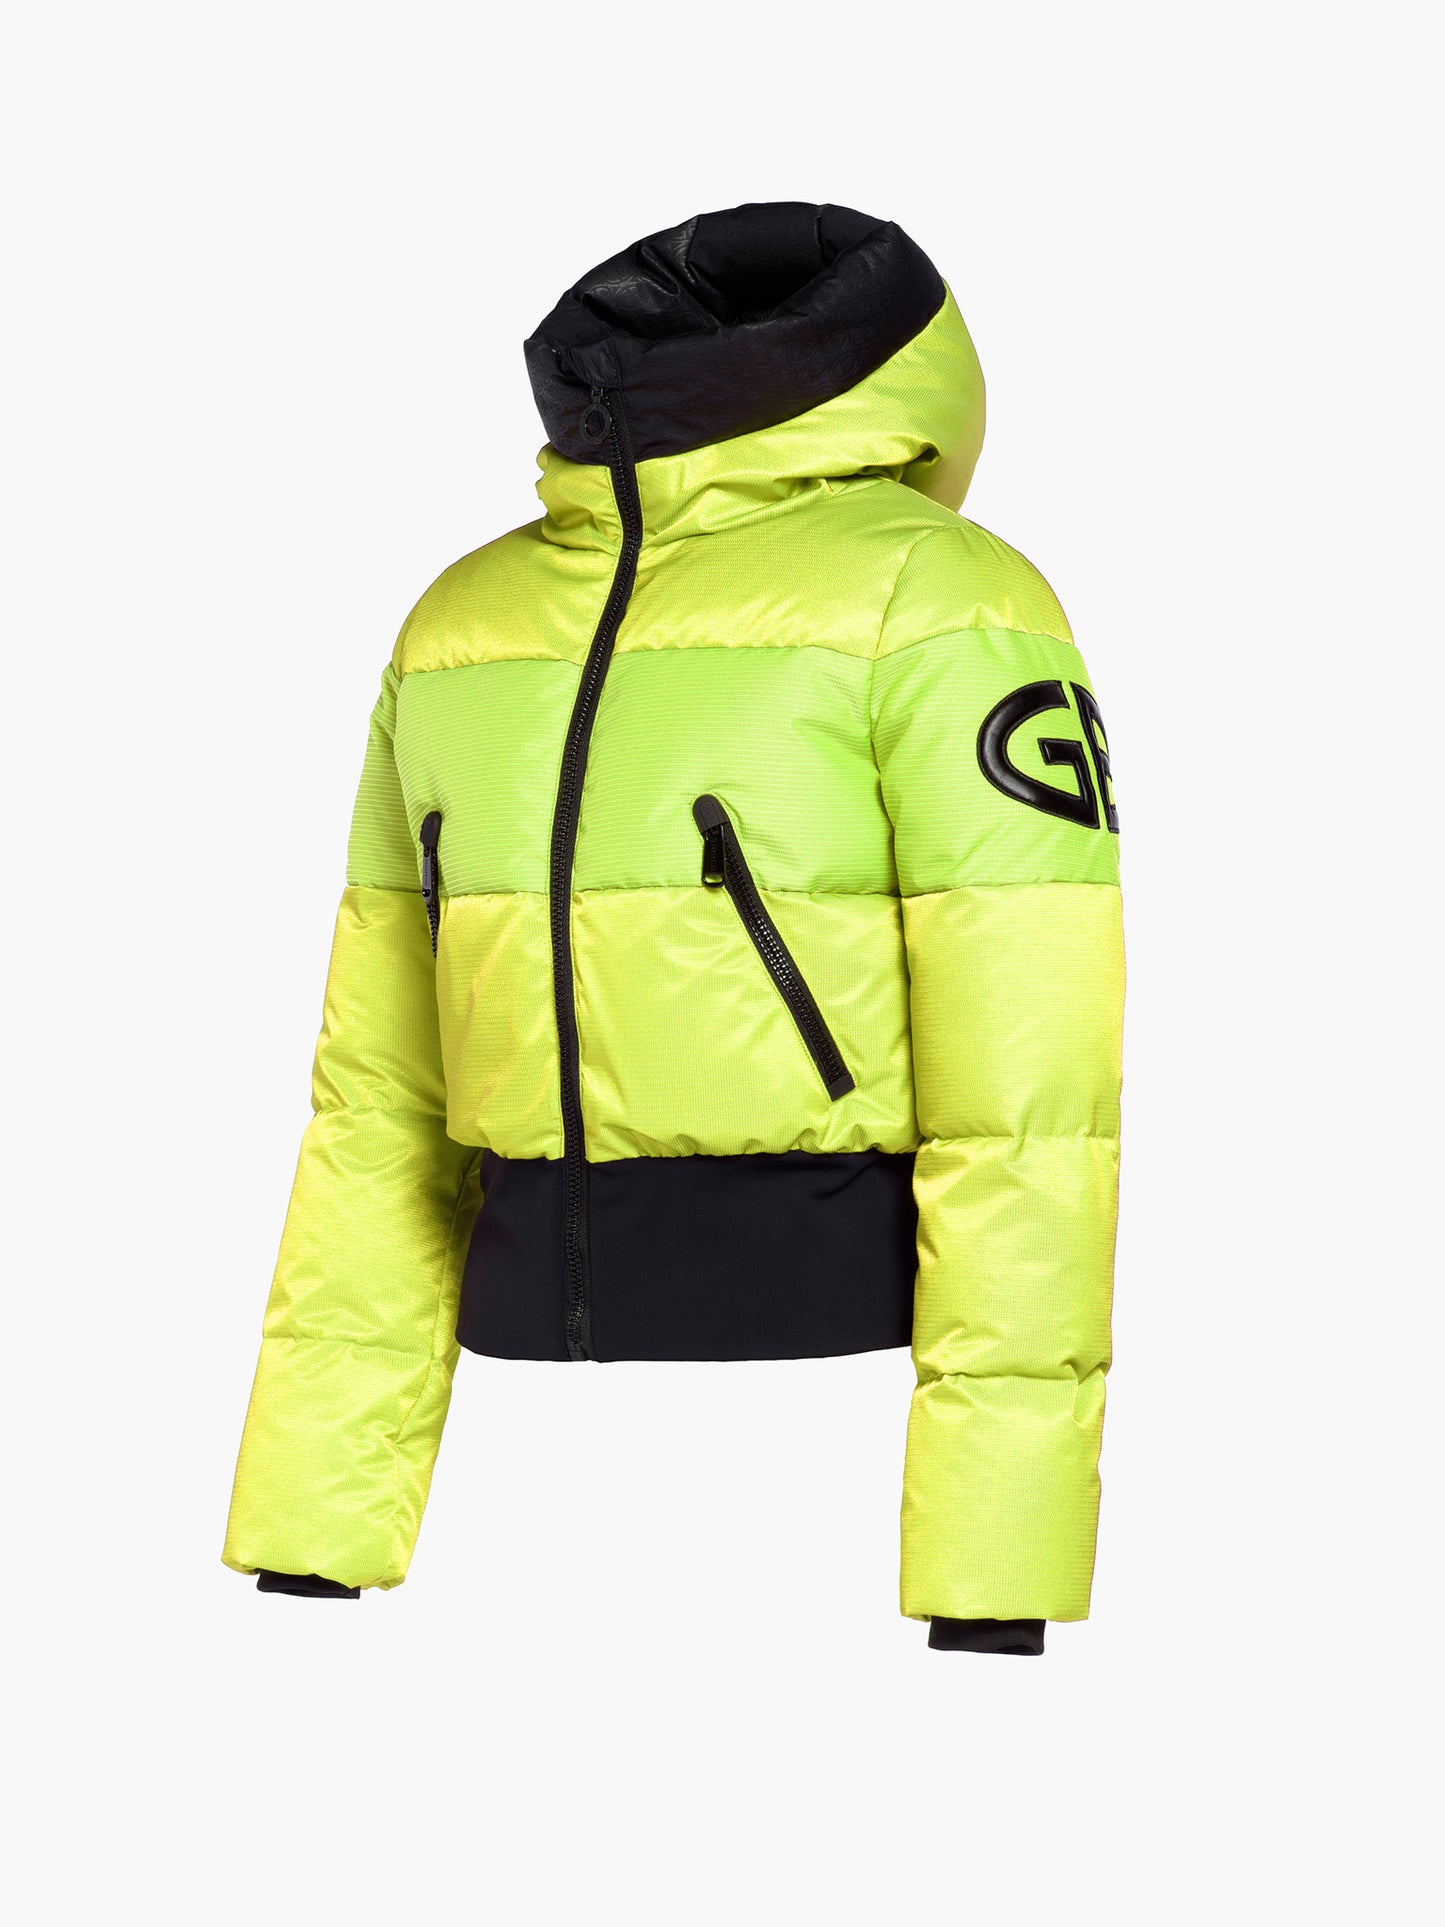 FEVER ski jacket